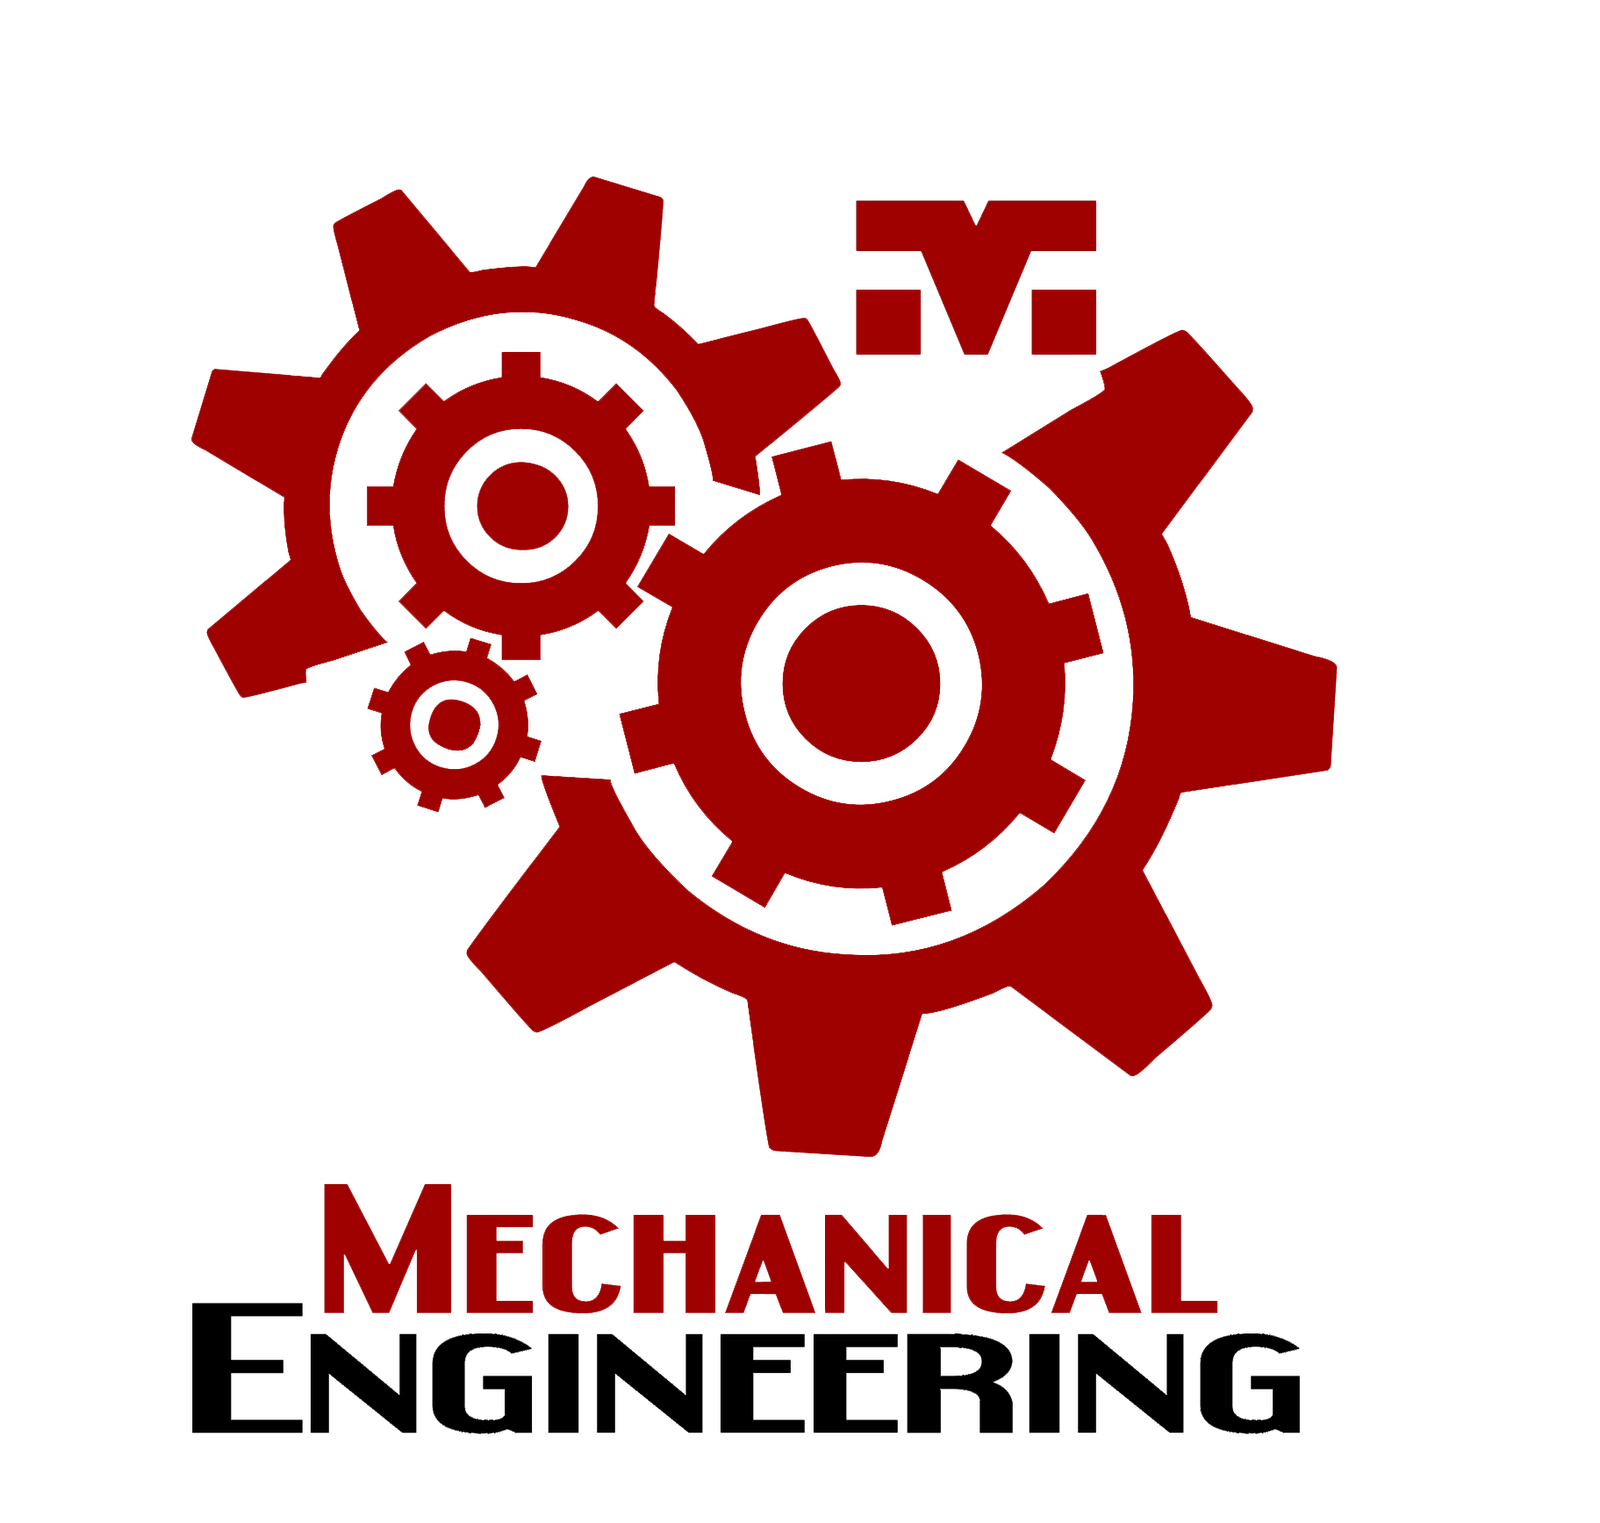 Mechanical engineering logo thermal. Engineer clipart engineer symbol